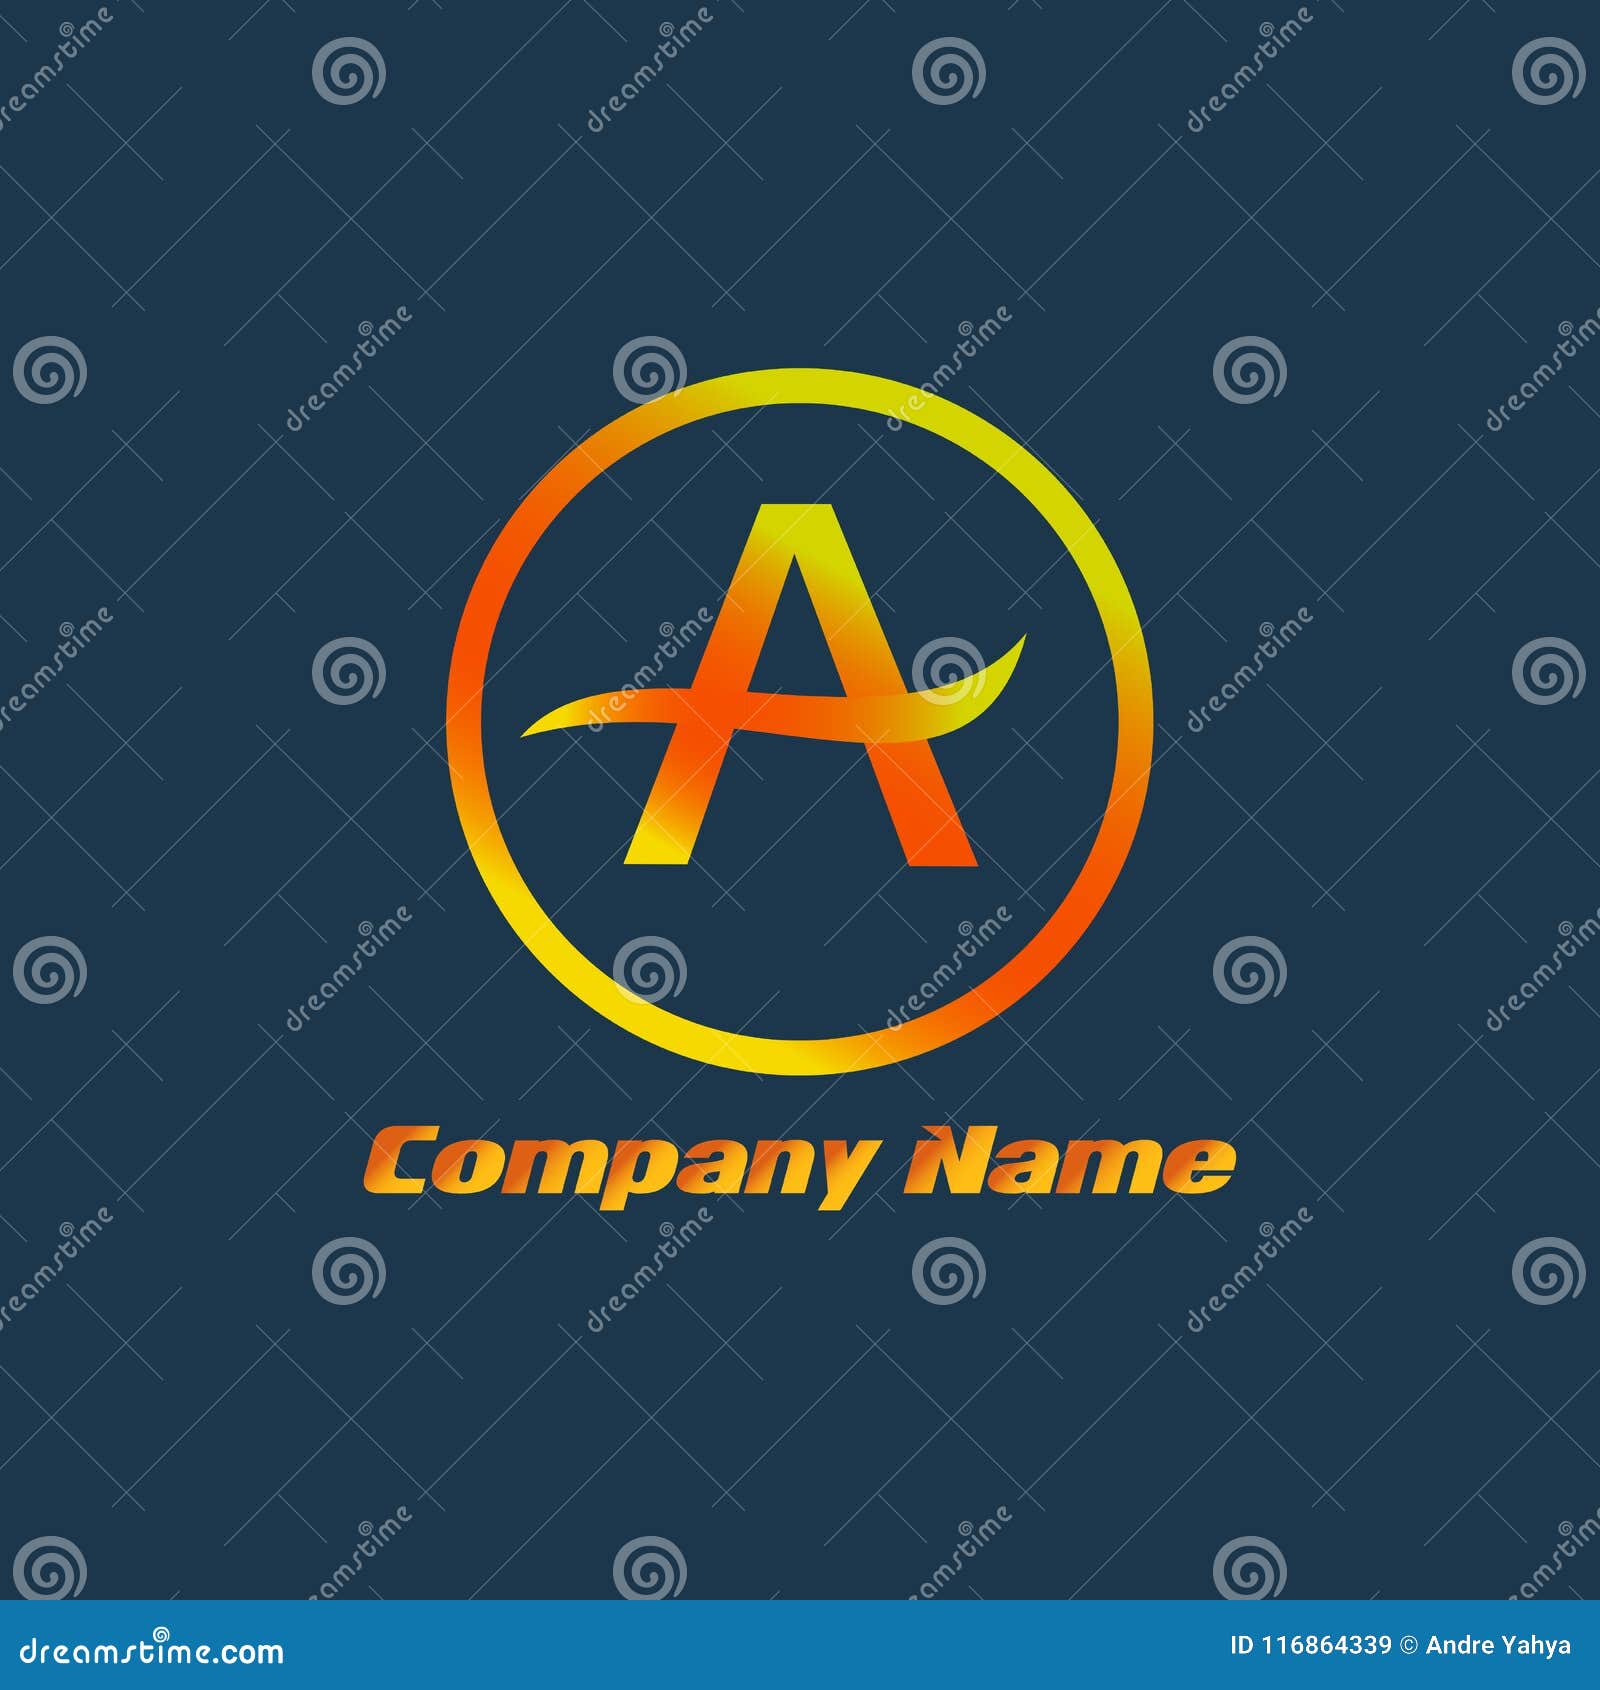 Abcd logo design vectors free download 70,867 editable .ai .eps .svg .cdr  files